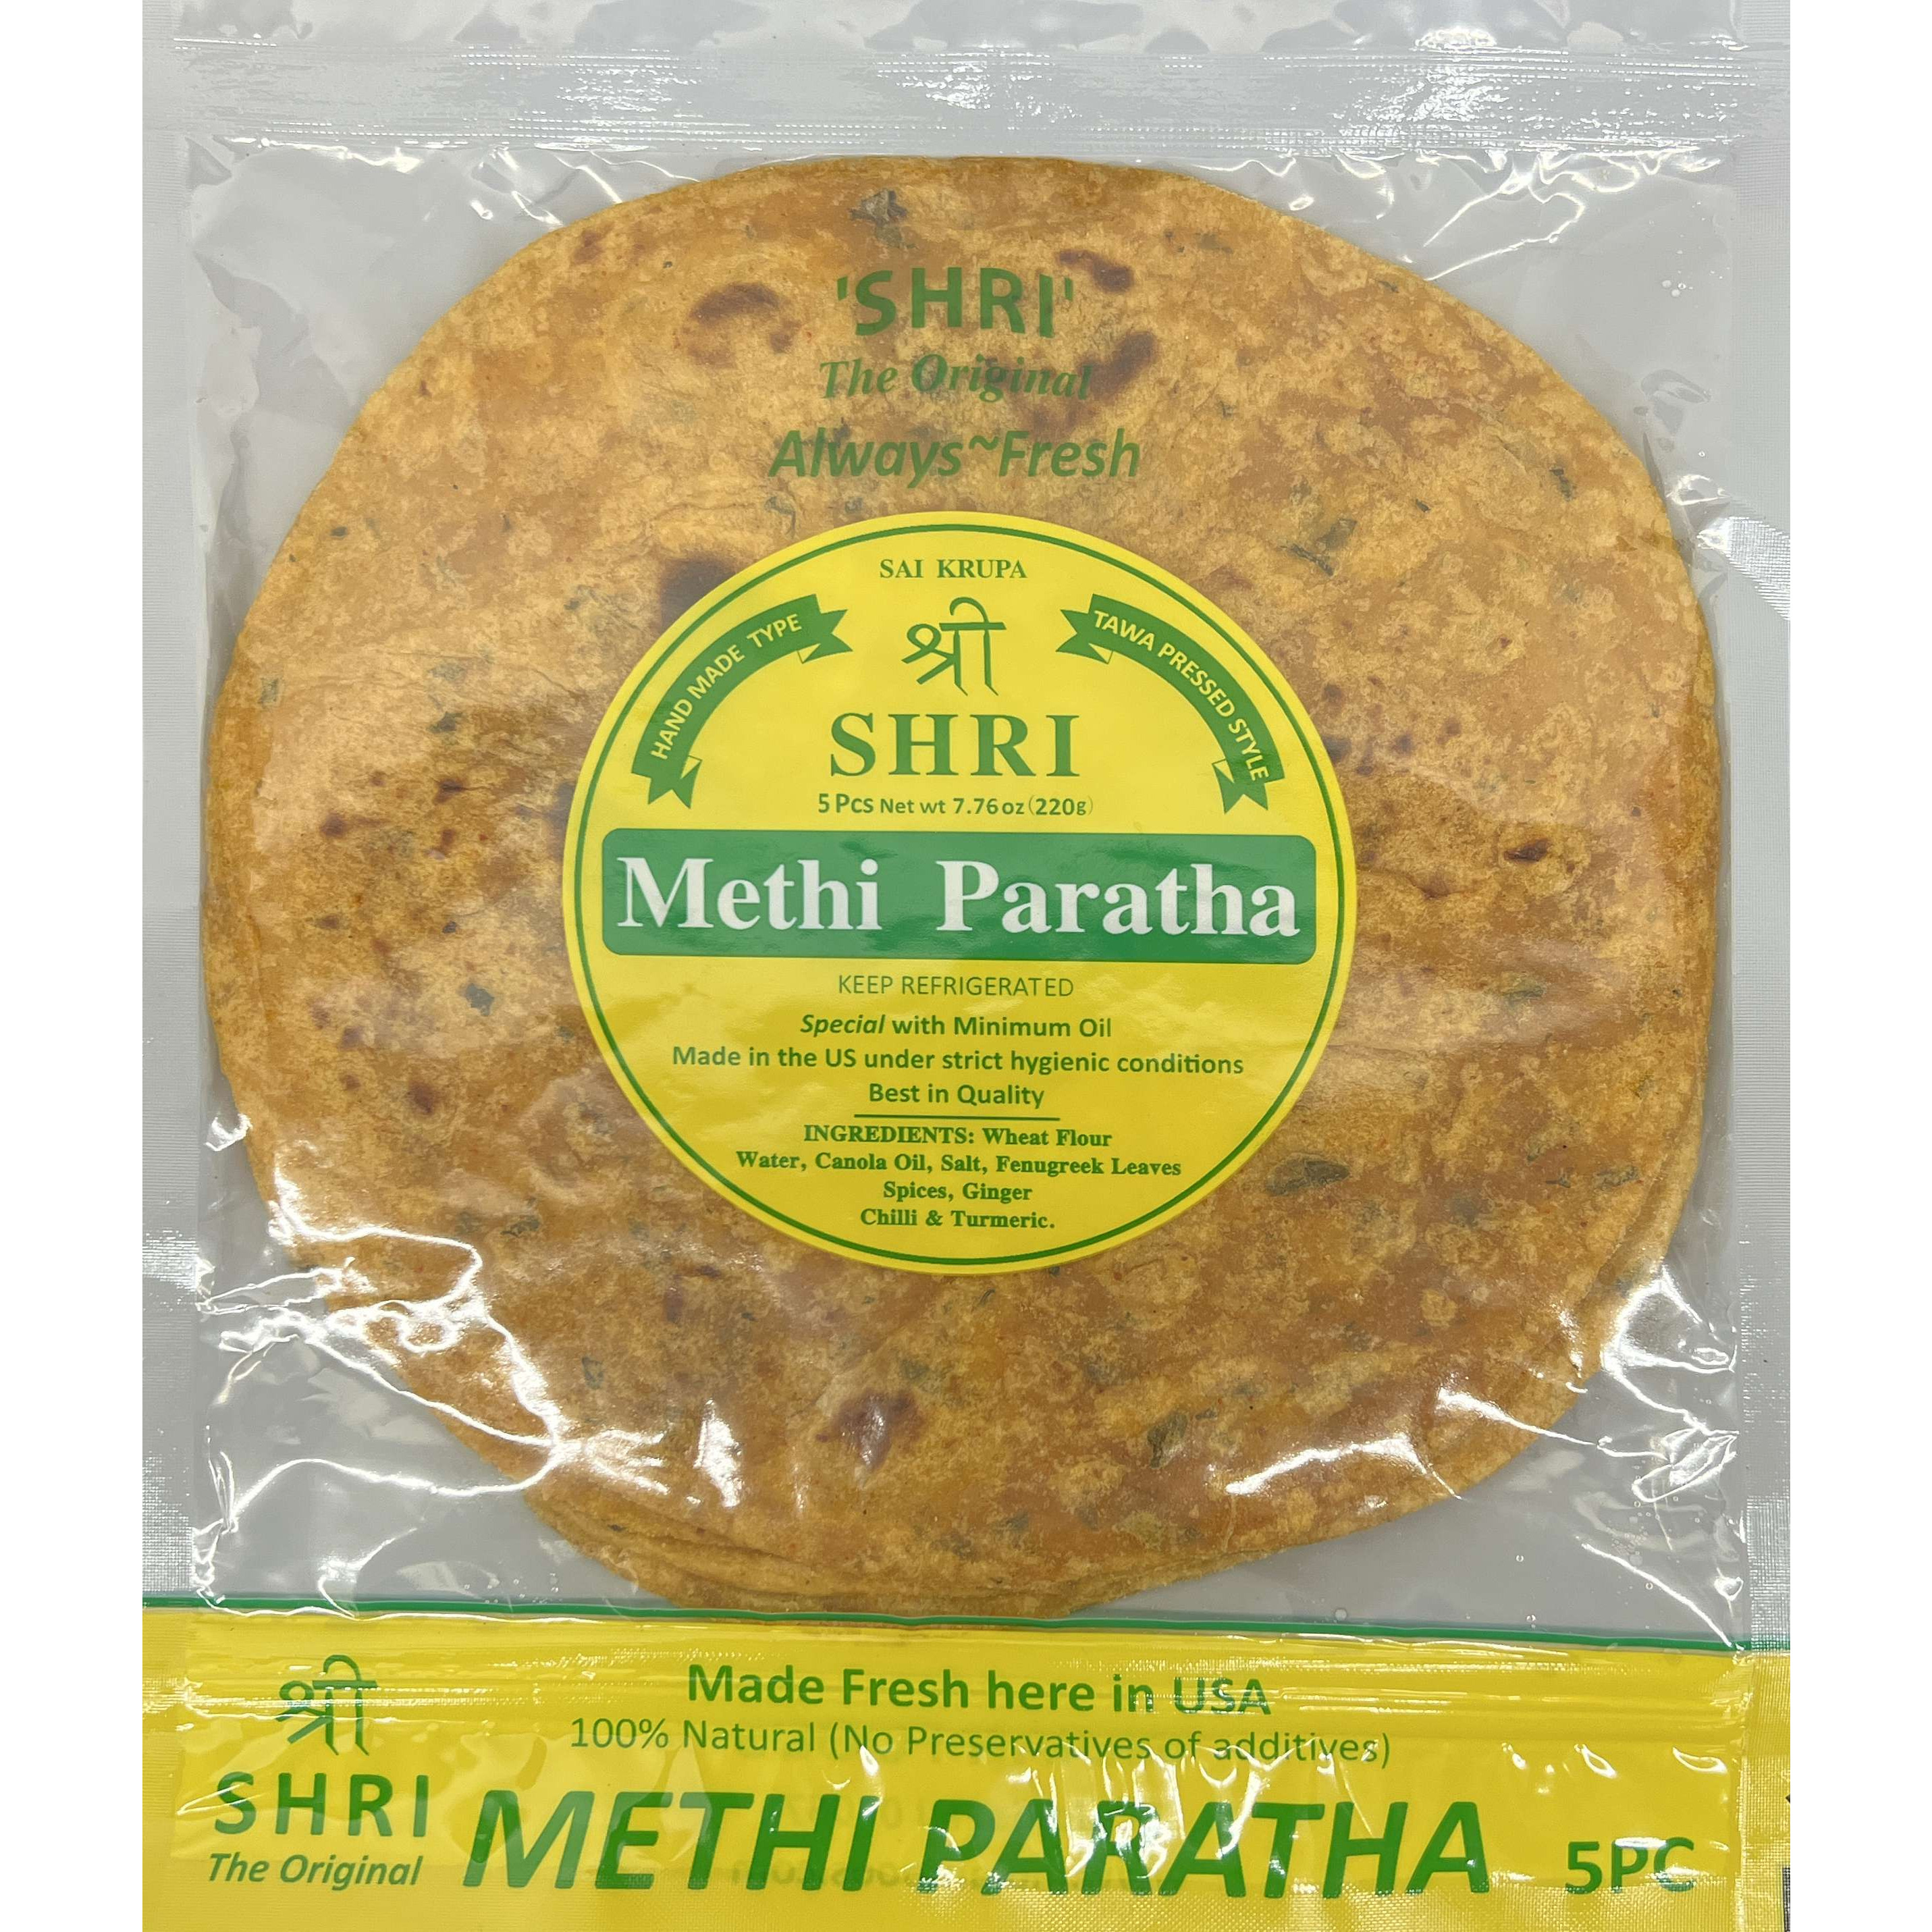 Shri Methi Paratha 5 Pc - 7.76 Oz (220 Gm)